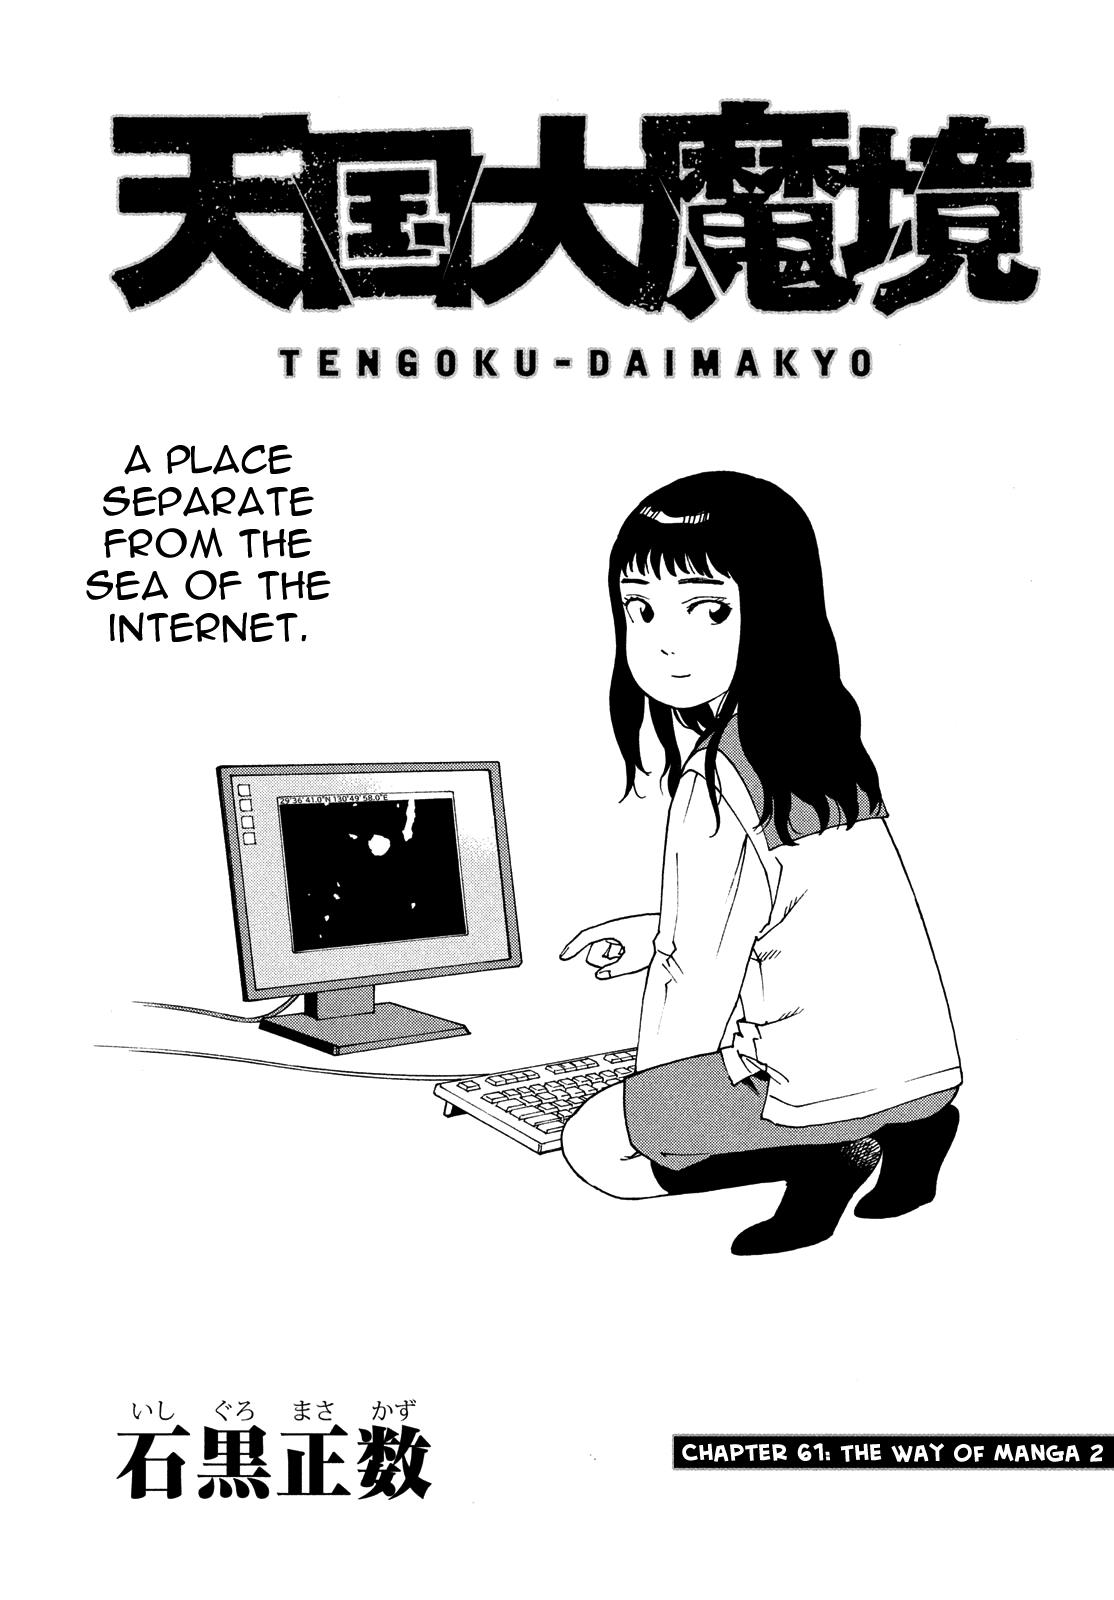 Tengoku Daimakyou Vol.10 Chapter 61: The Way Of Manga ➁ - Picture 1